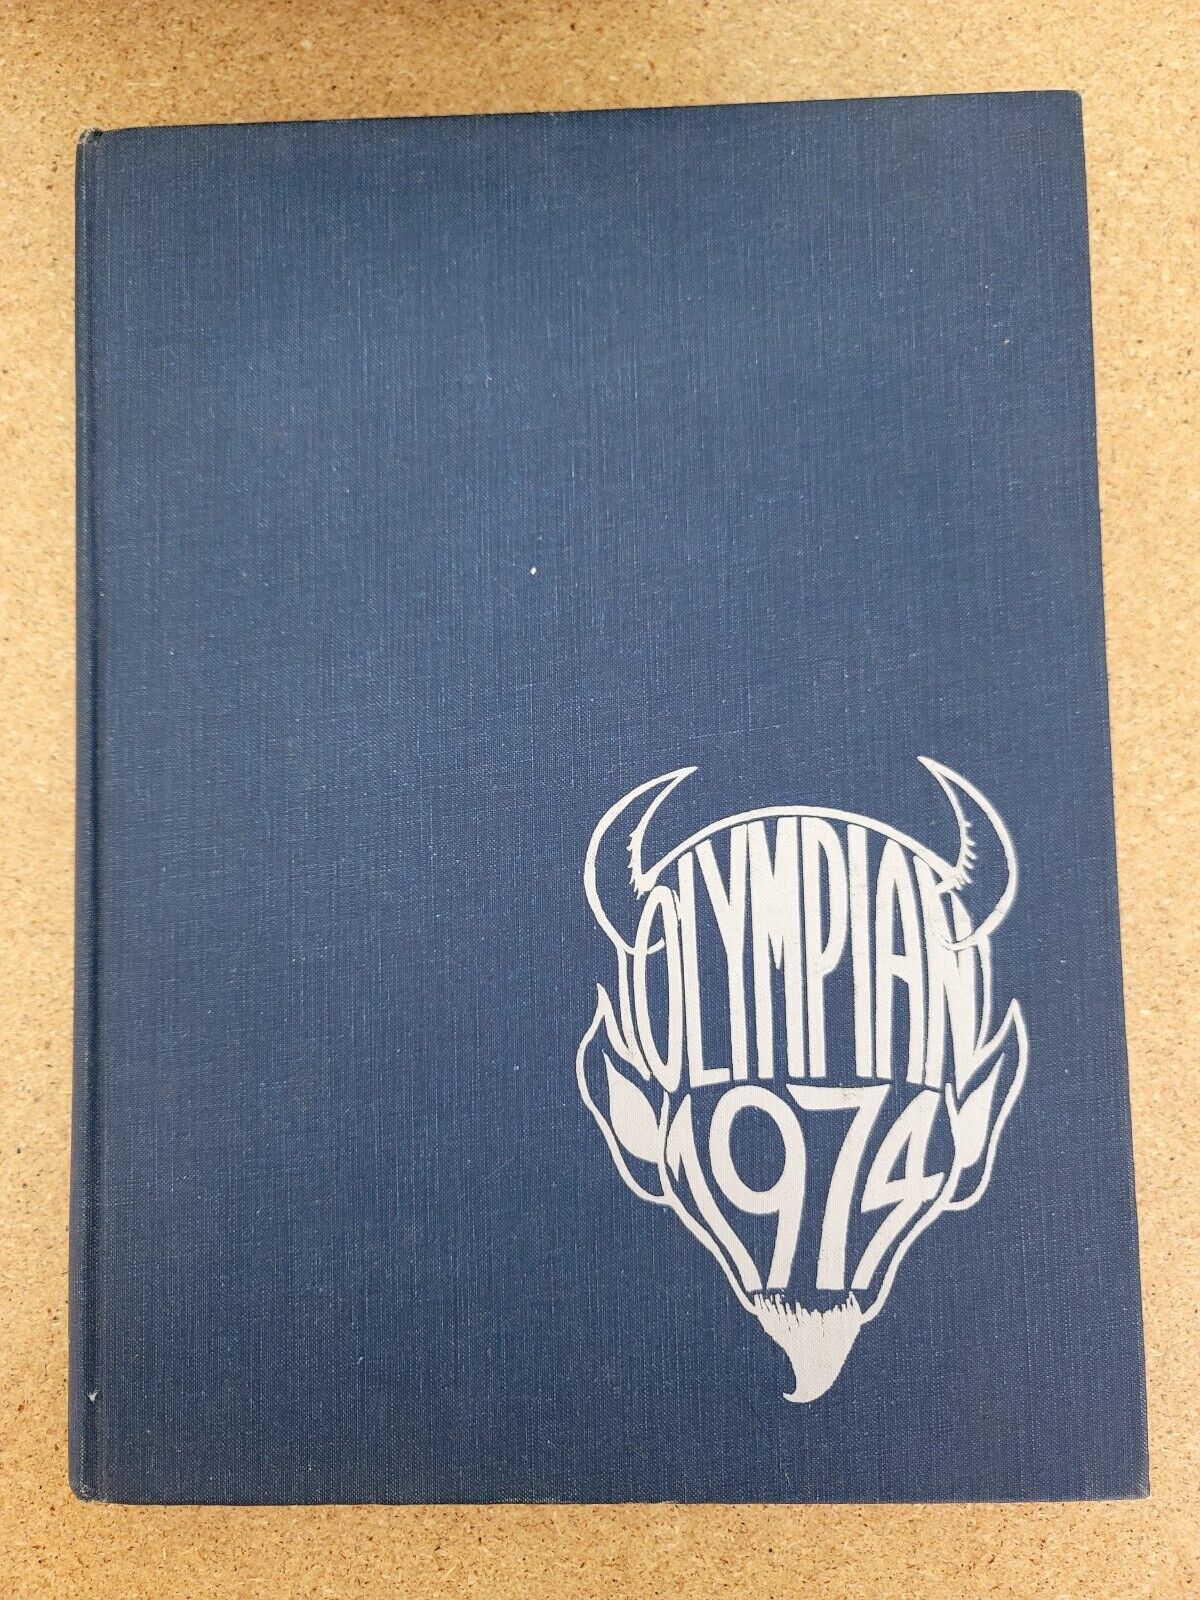 1974 Marietta High School Georgia Yearbook Volume 57, the Olympian